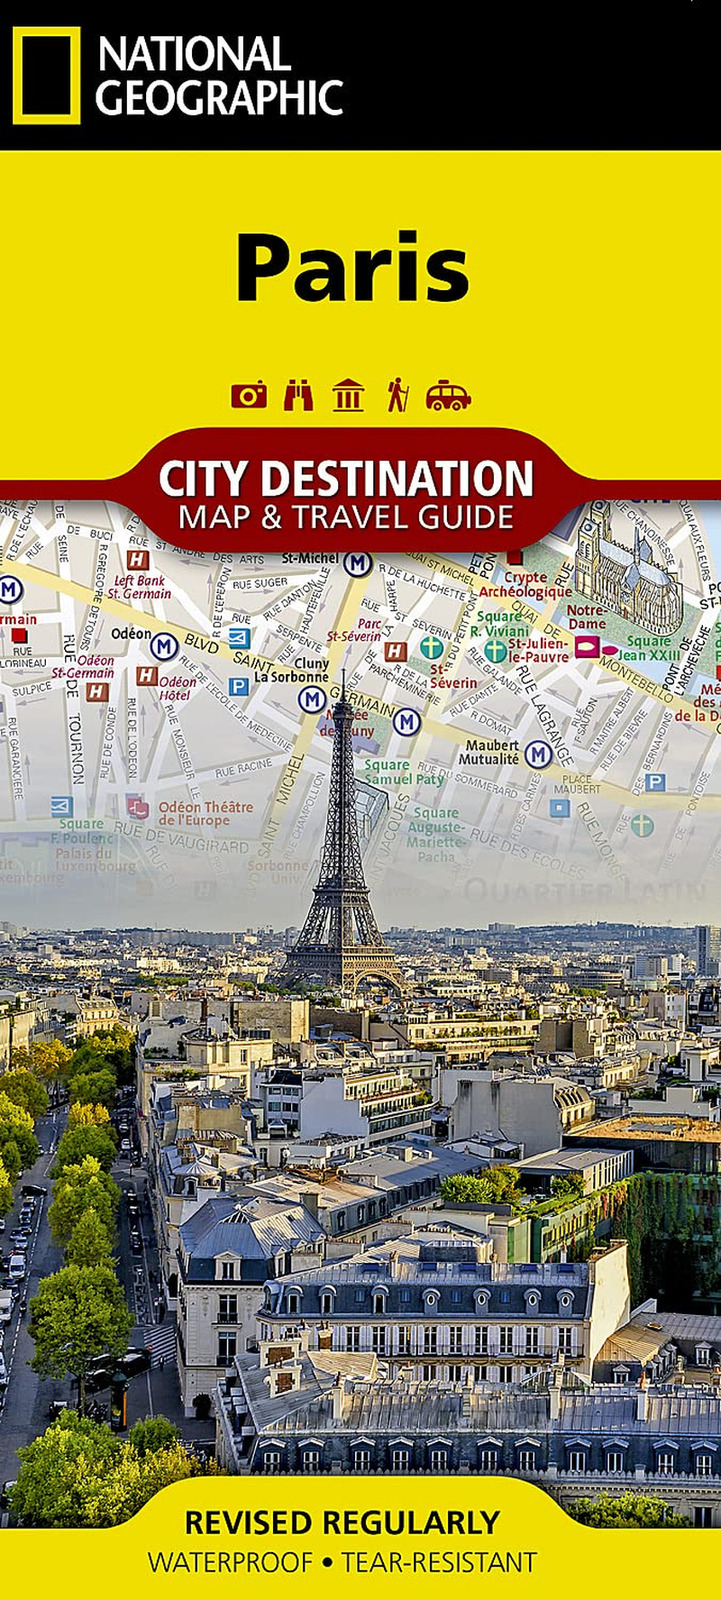 Paris Map (National Geographic Destination City Map) - NEW